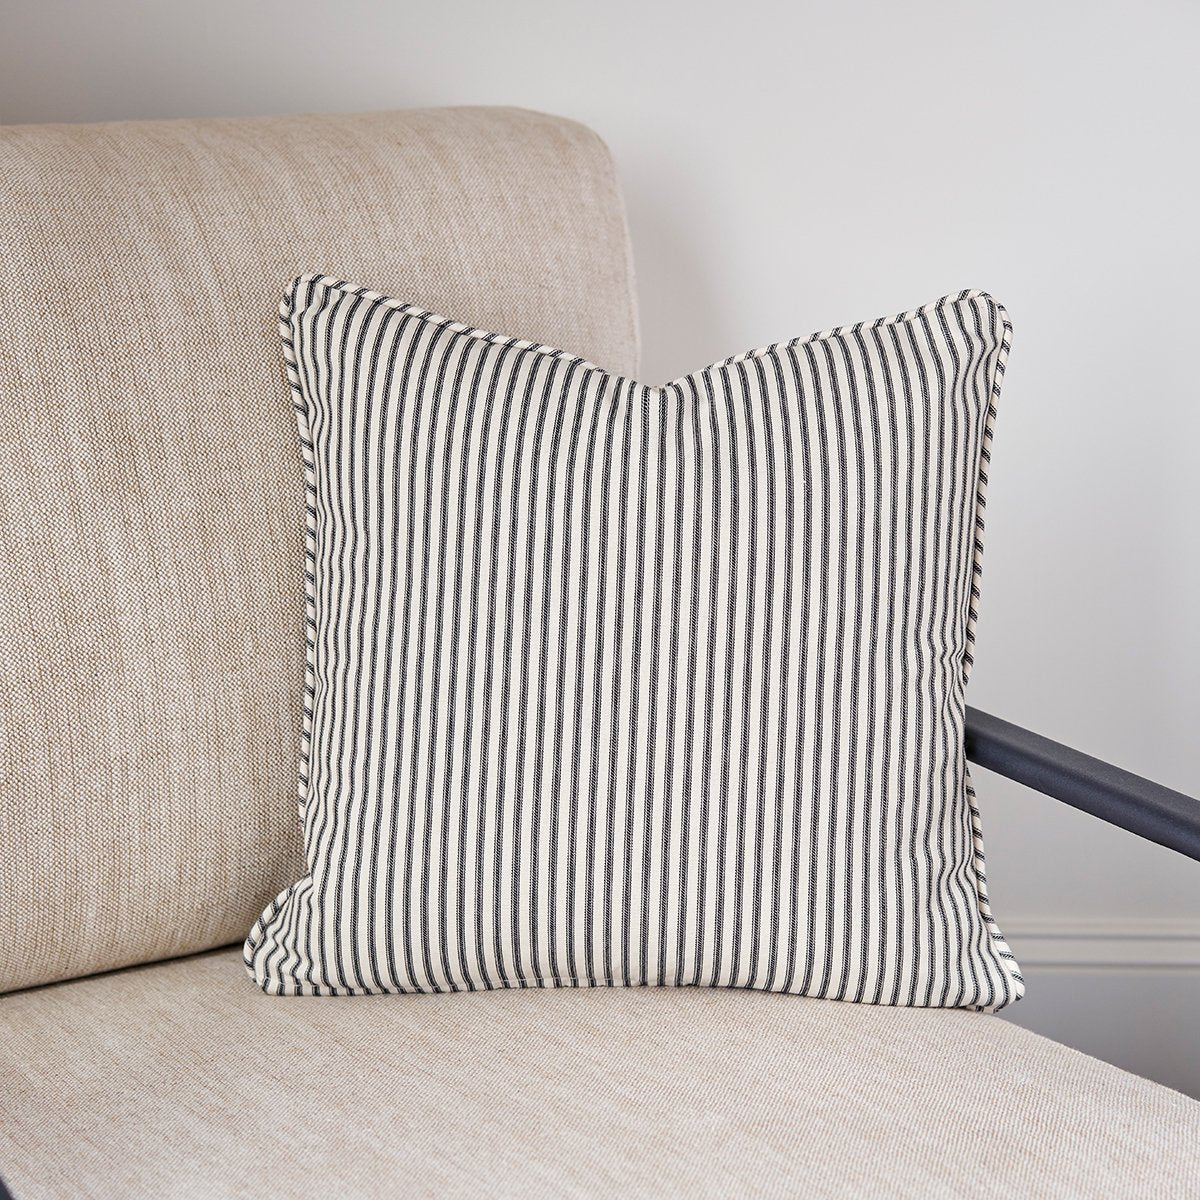 Ticking Stripe Throw Pillow Cover 18x18 – Daniel Dry Goods